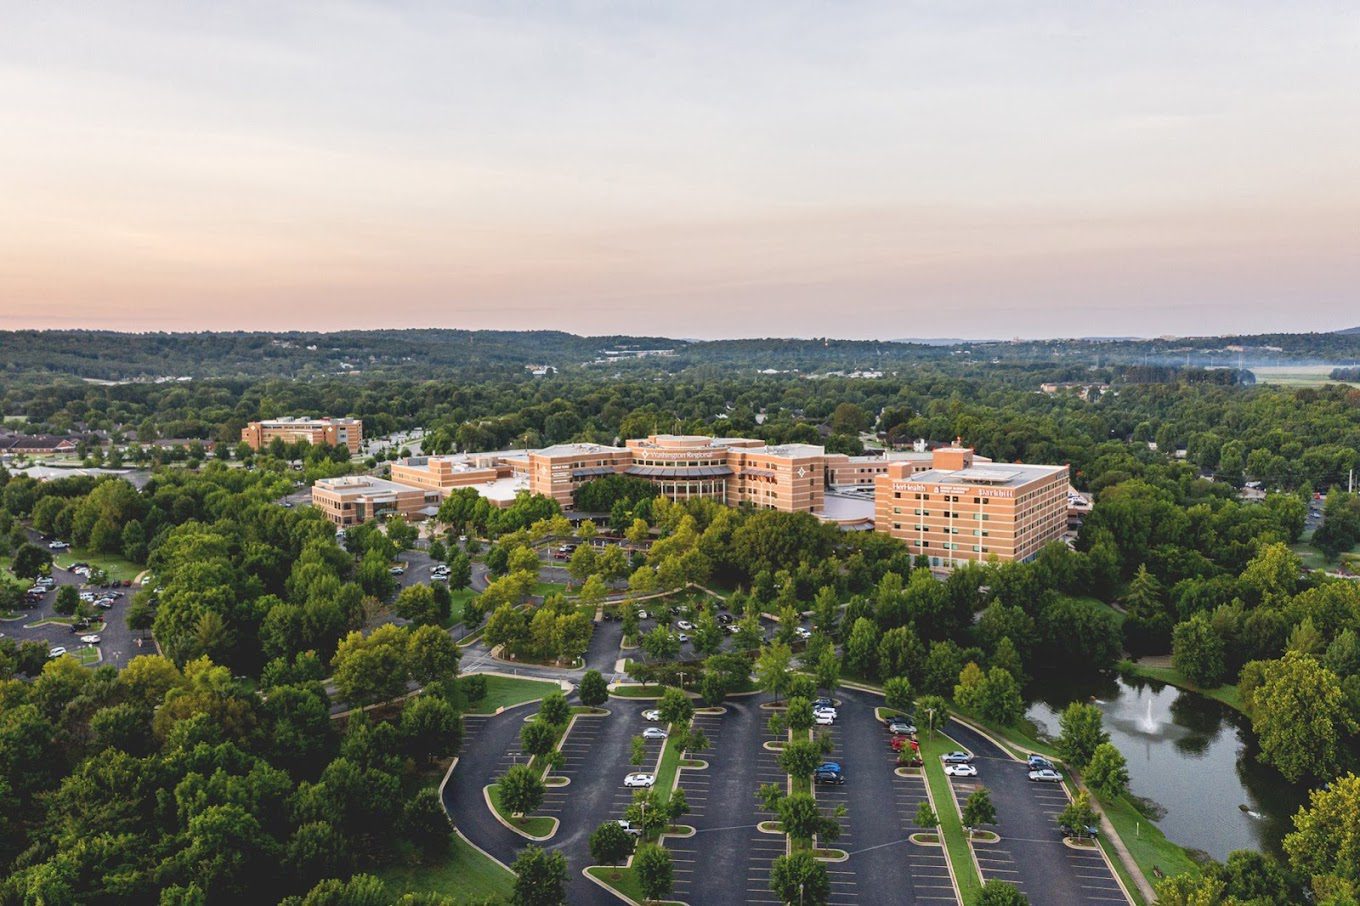 Washington Regional Named Top Arkansas Hospital 3 Years Running